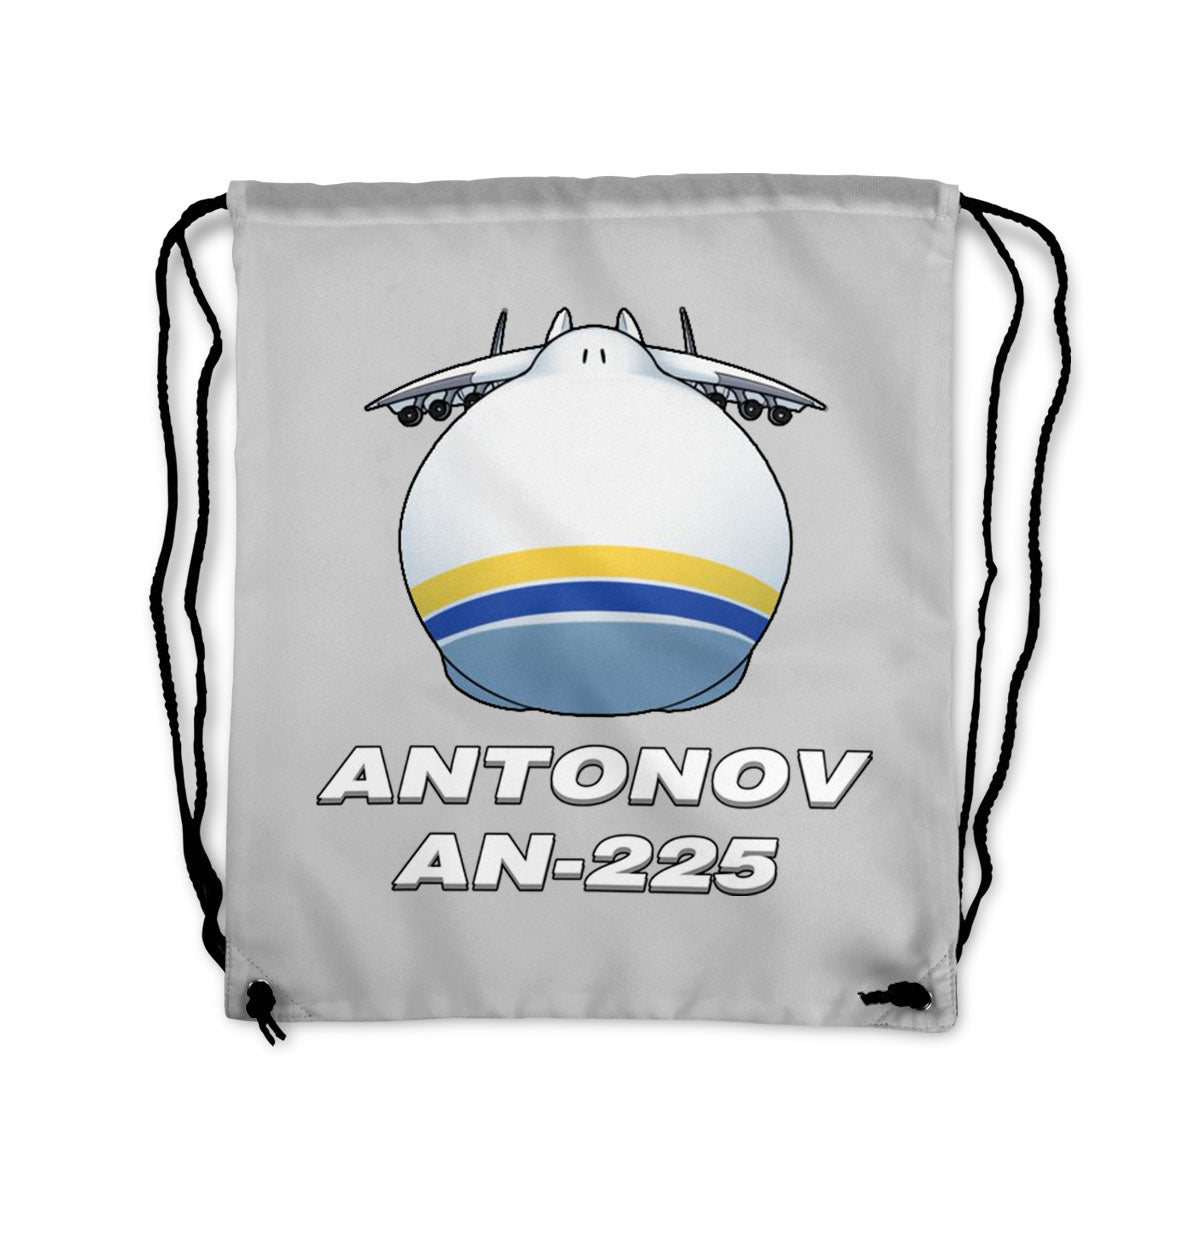 Antonov AN-225 (20) Designed Drawstring Bags